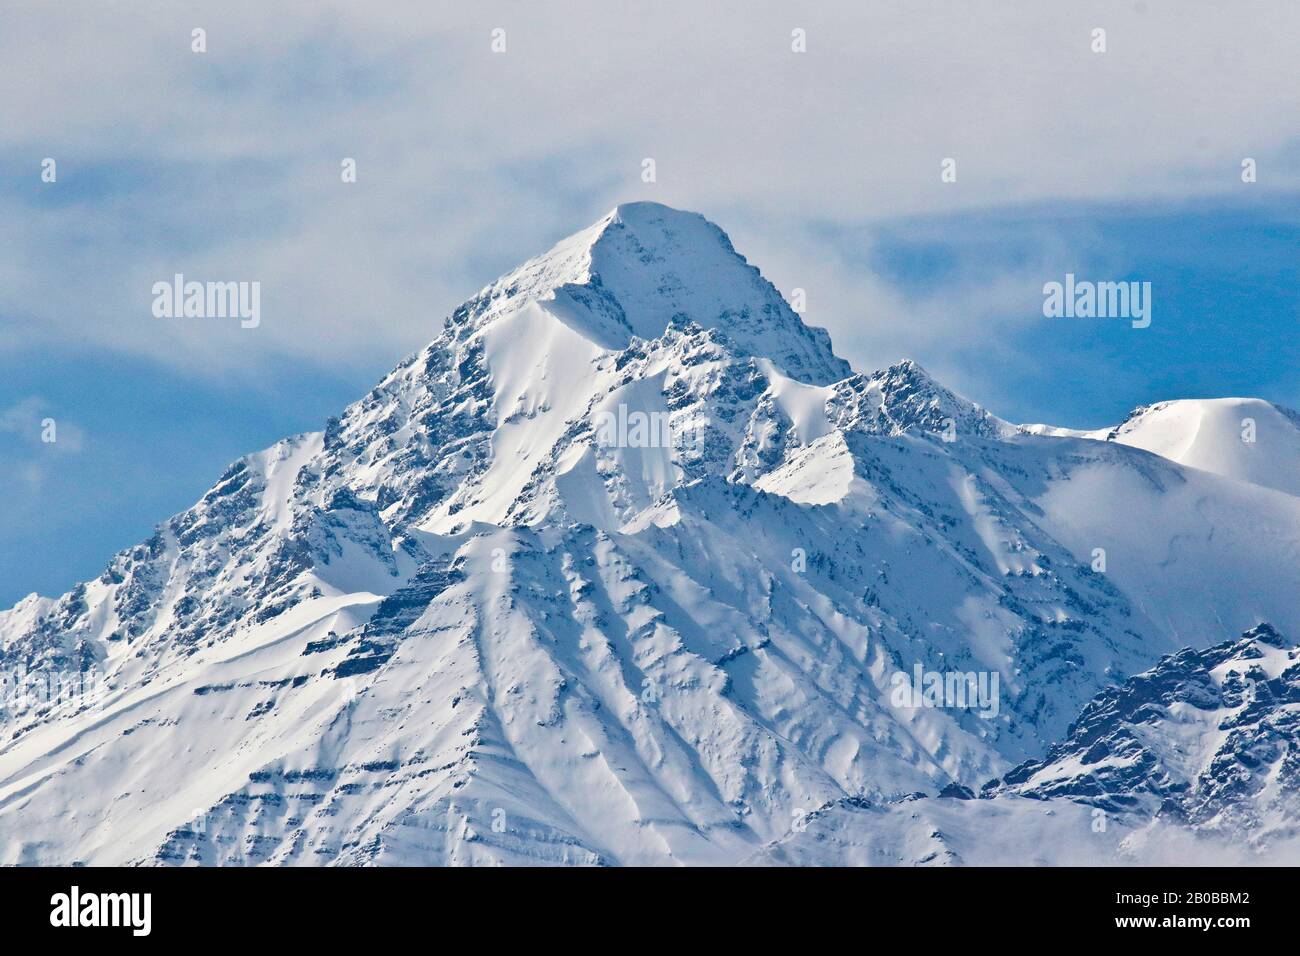 Stok Kangri is the highest mountain in the Stok Range of the Himalayas in the Ladakh. India Stock Photo